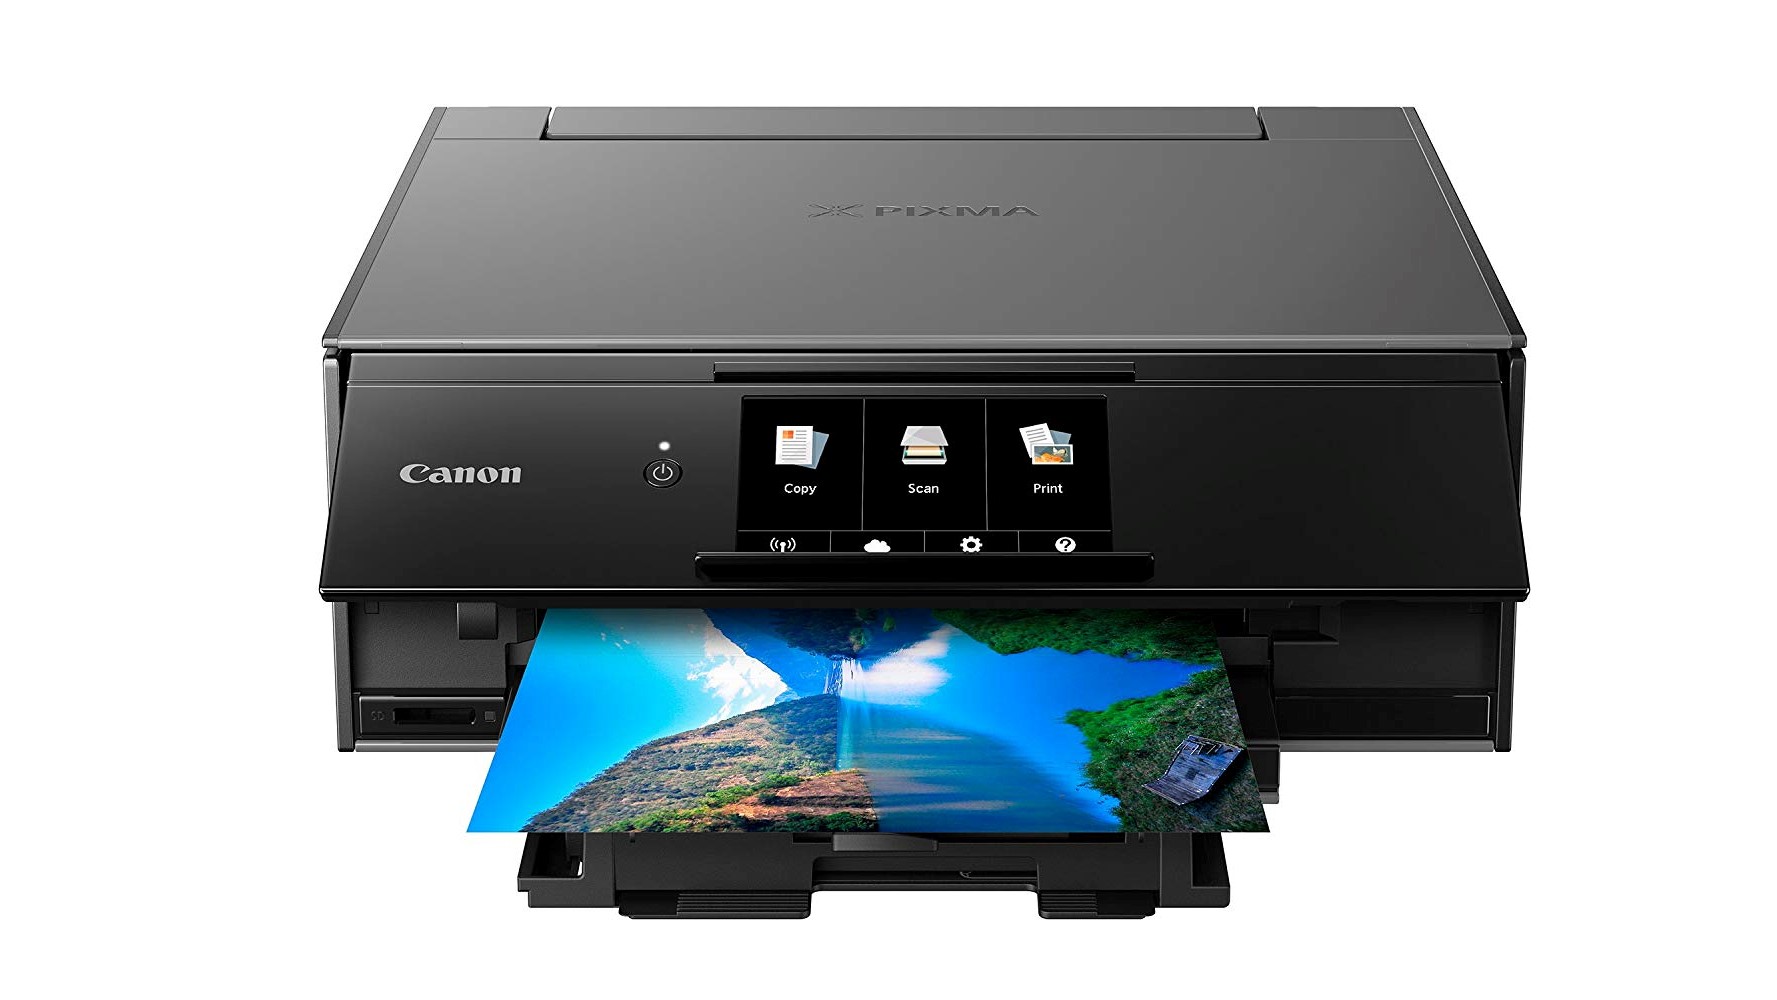 Canon TS9120 photo printer